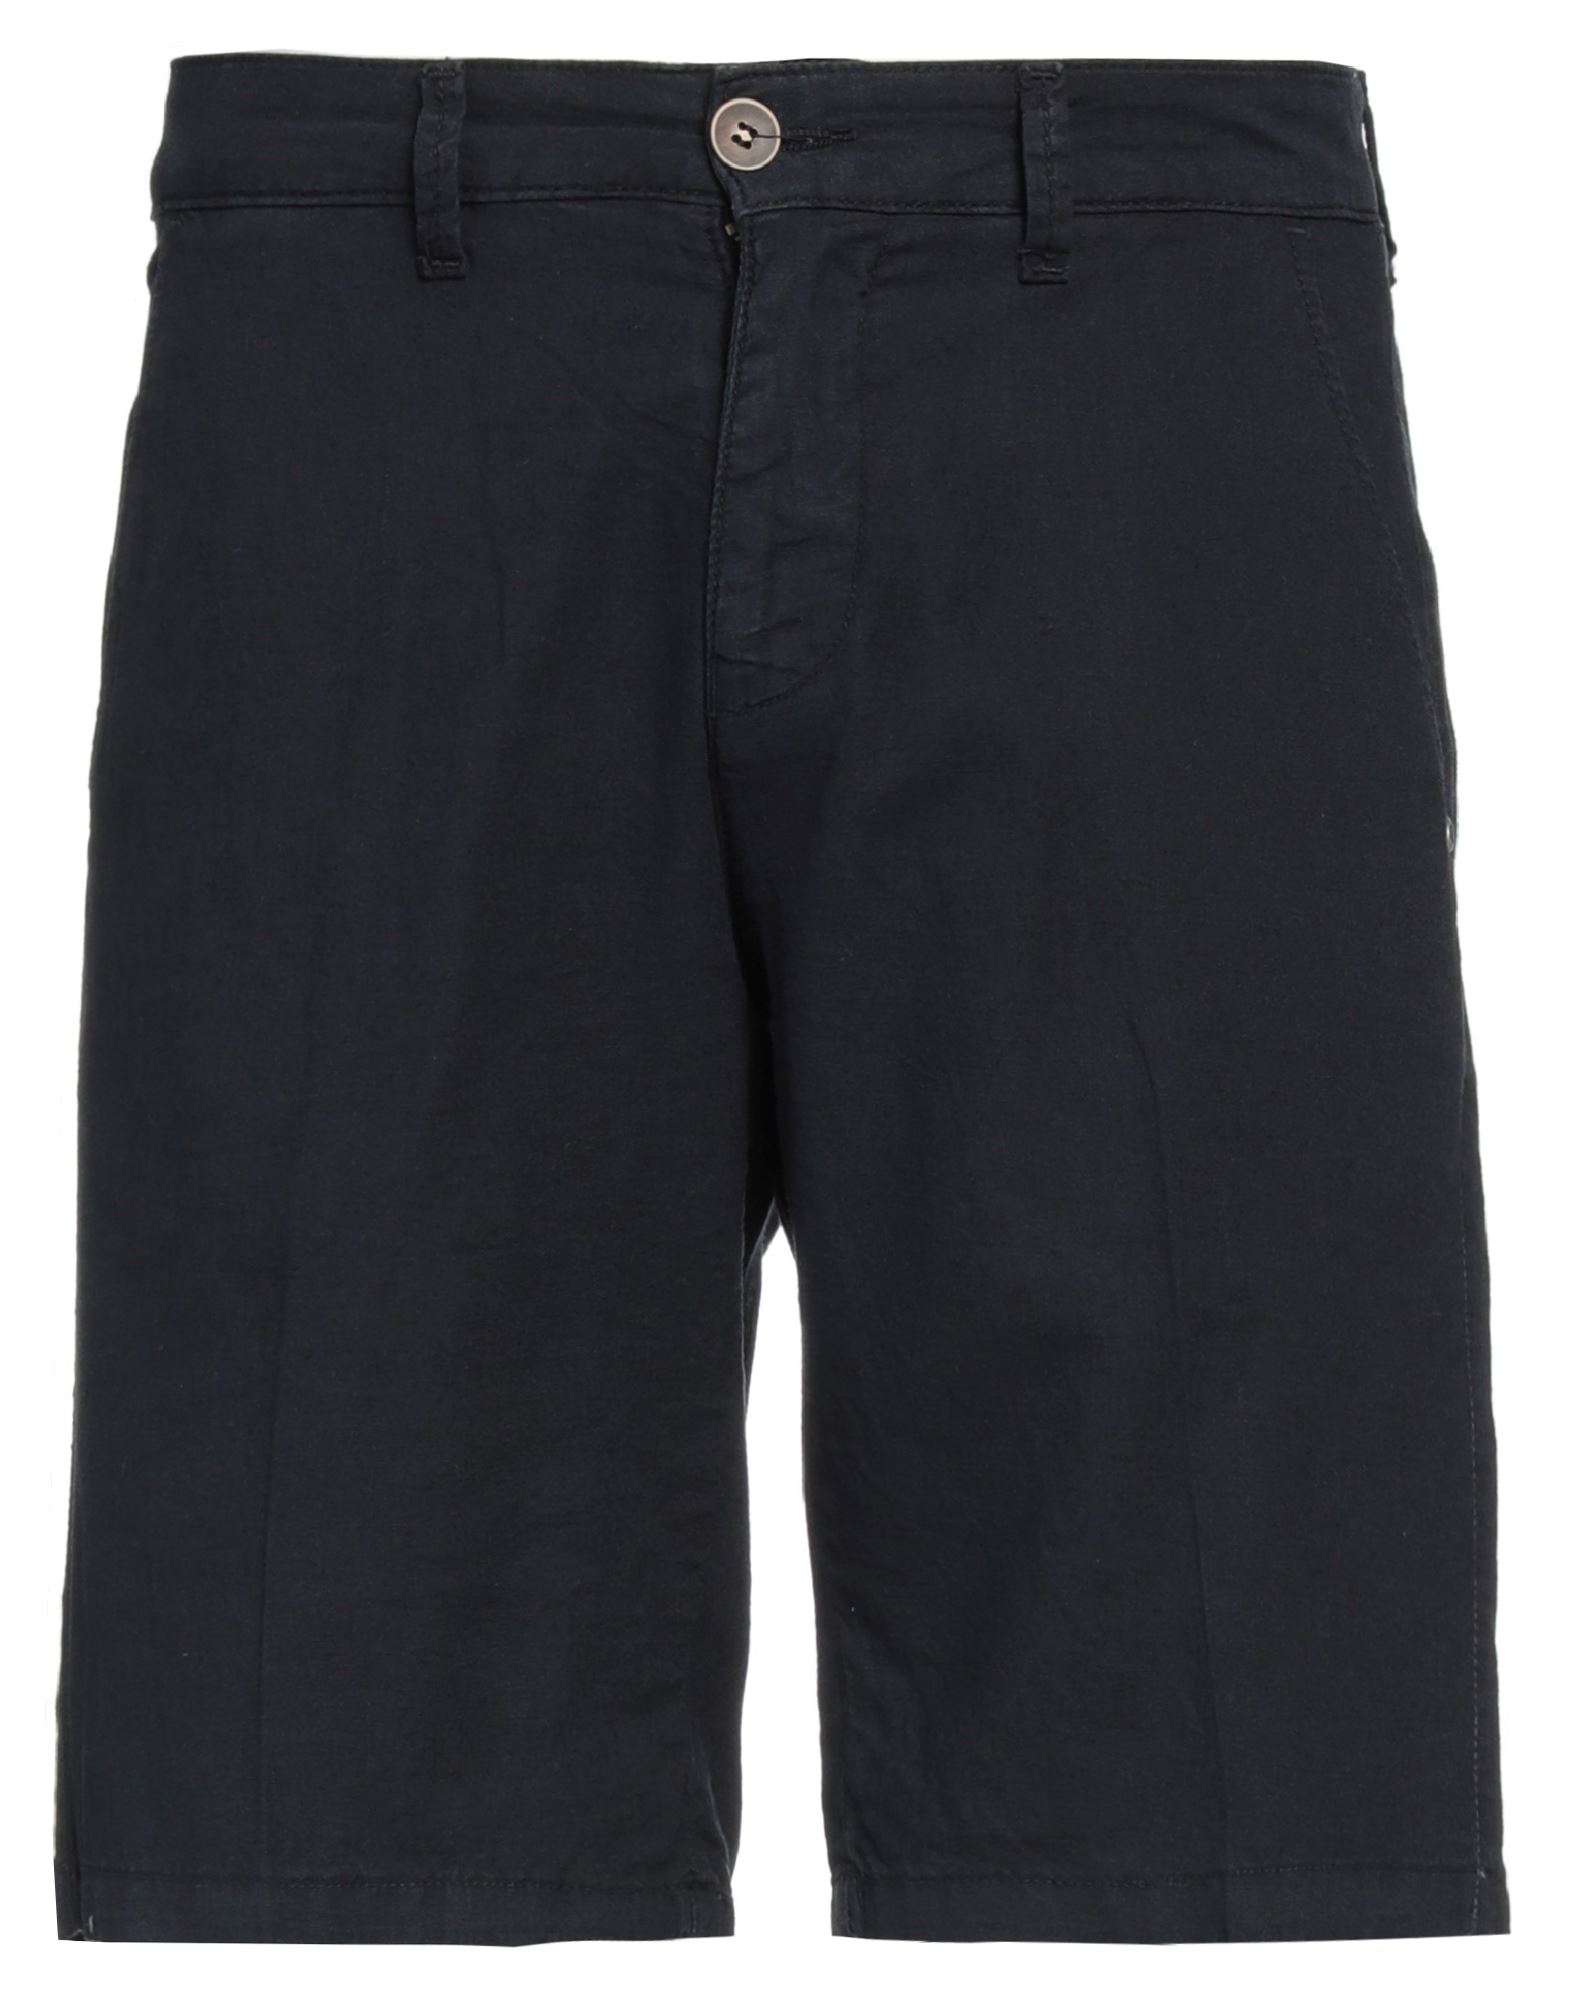 Take-two Man Shorts & Bermuda Shorts Midnight Blue Size 29 Linen, Cotton